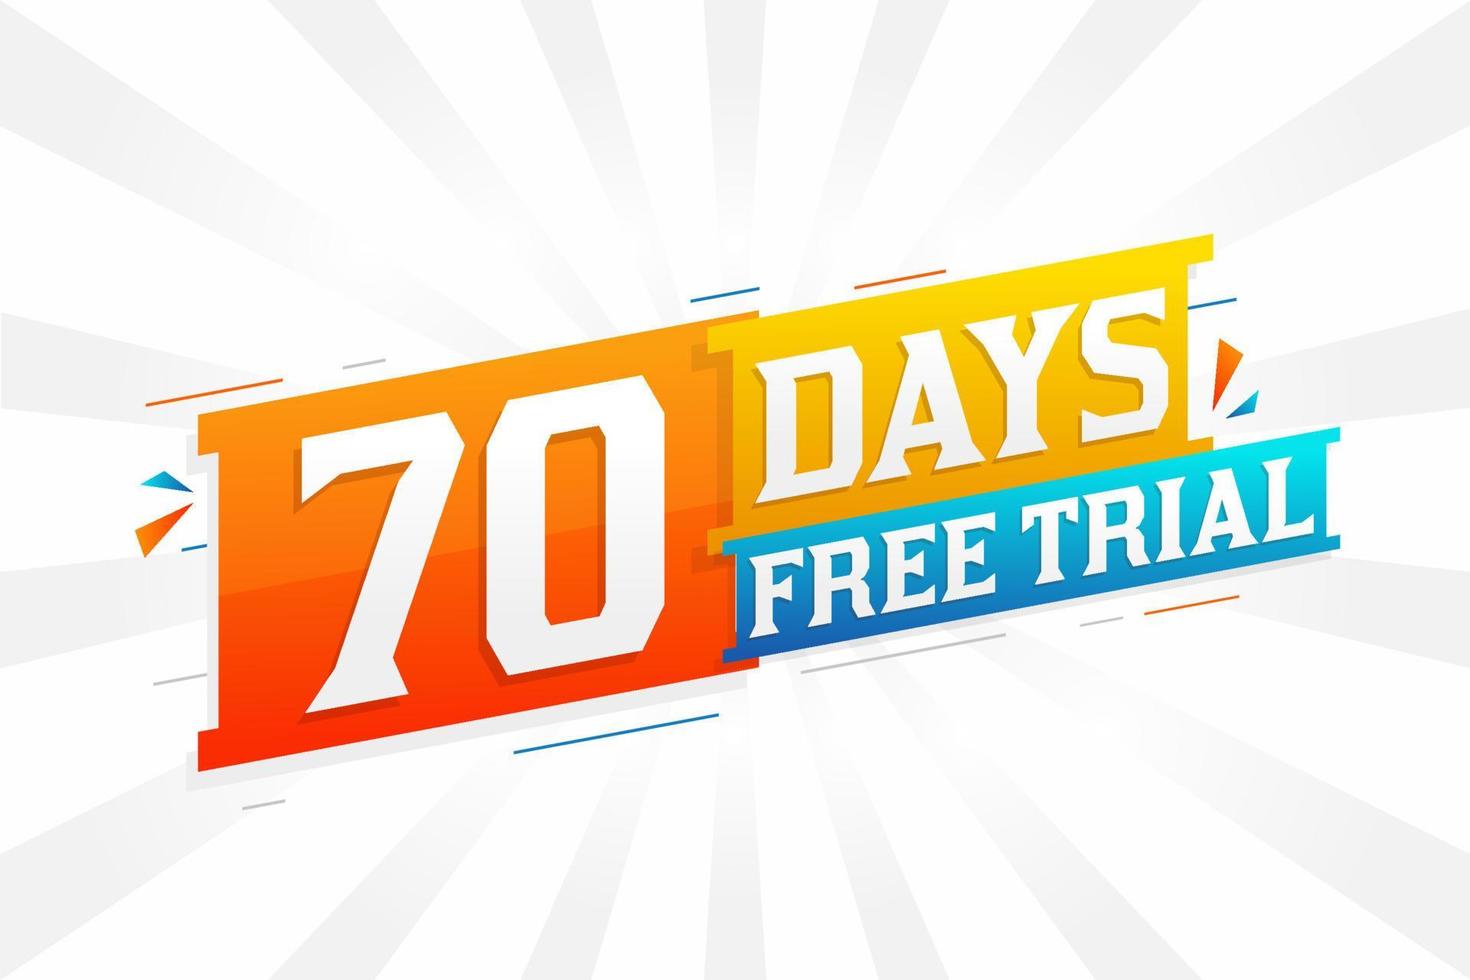 Vector de stock de texto en negrita promocional de prueba gratuita de 70 días